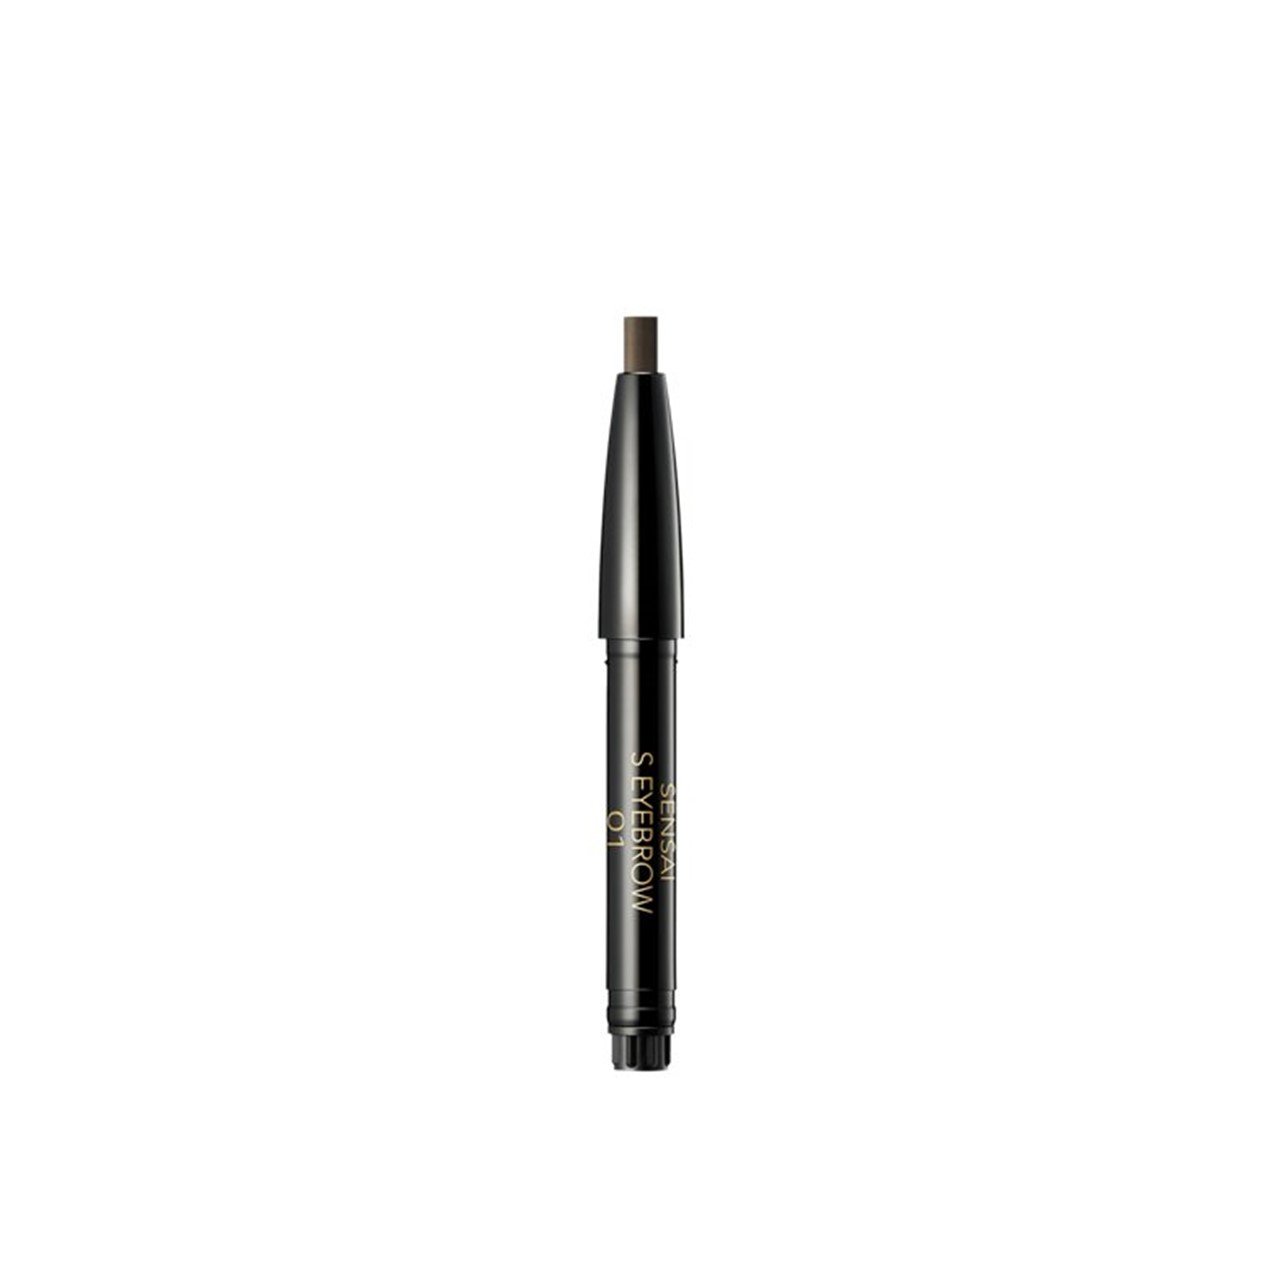 SENSAI Styling Eyebrow Pencil Refill 01 Dark Brown 0.2g